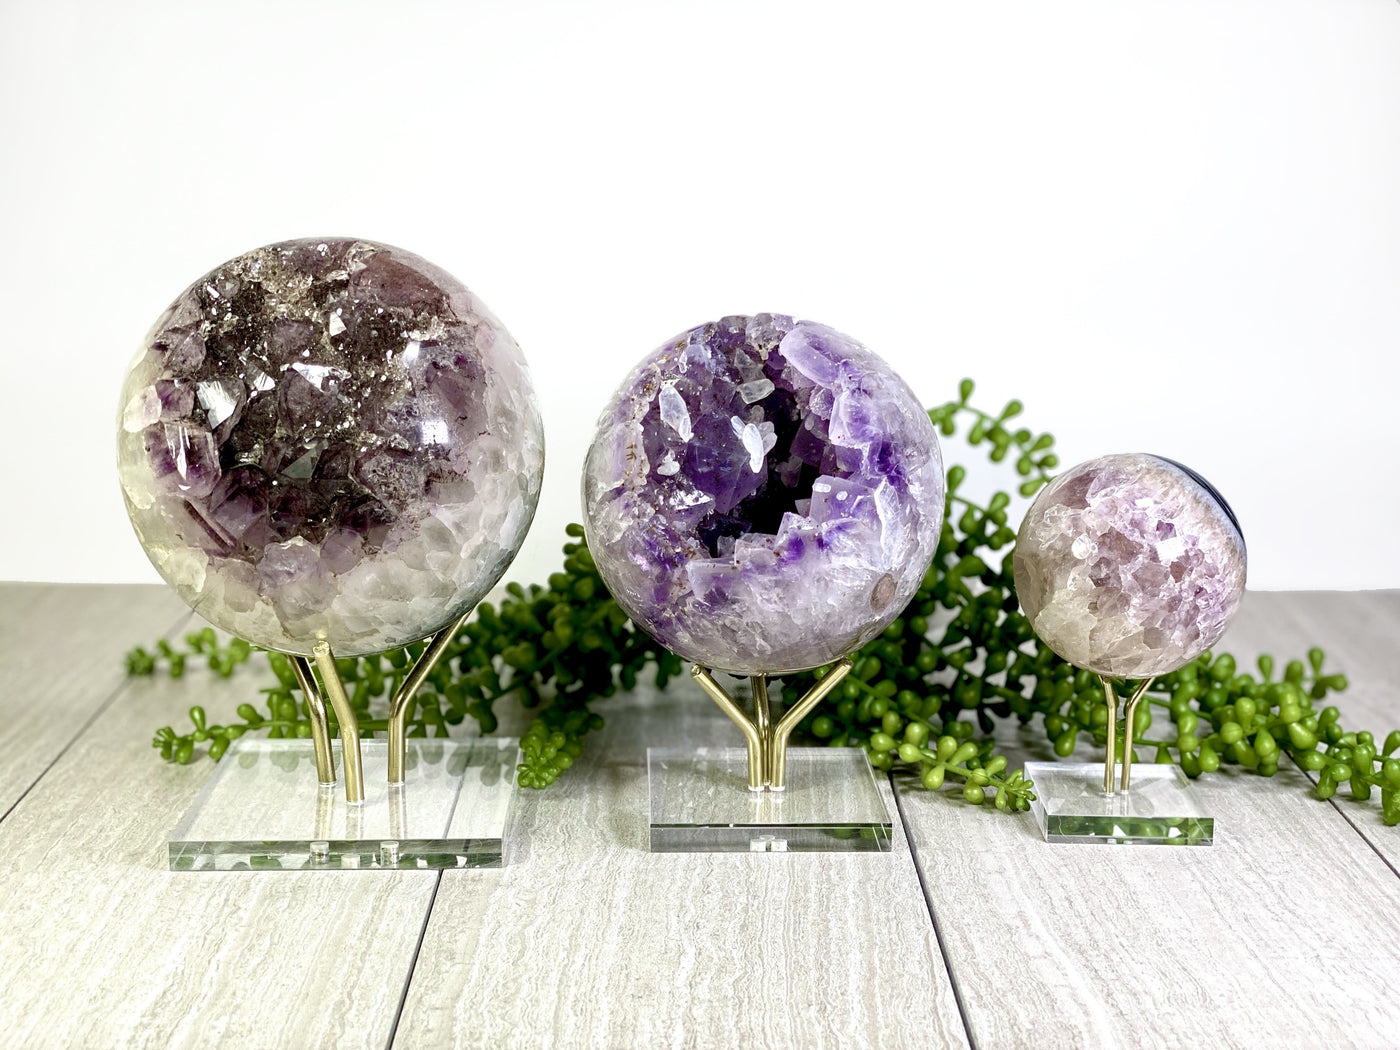 Three Crystal Sphere Display Stand Acrylic Crystal Holderholding amethyst druzy spheres (spheres not included)